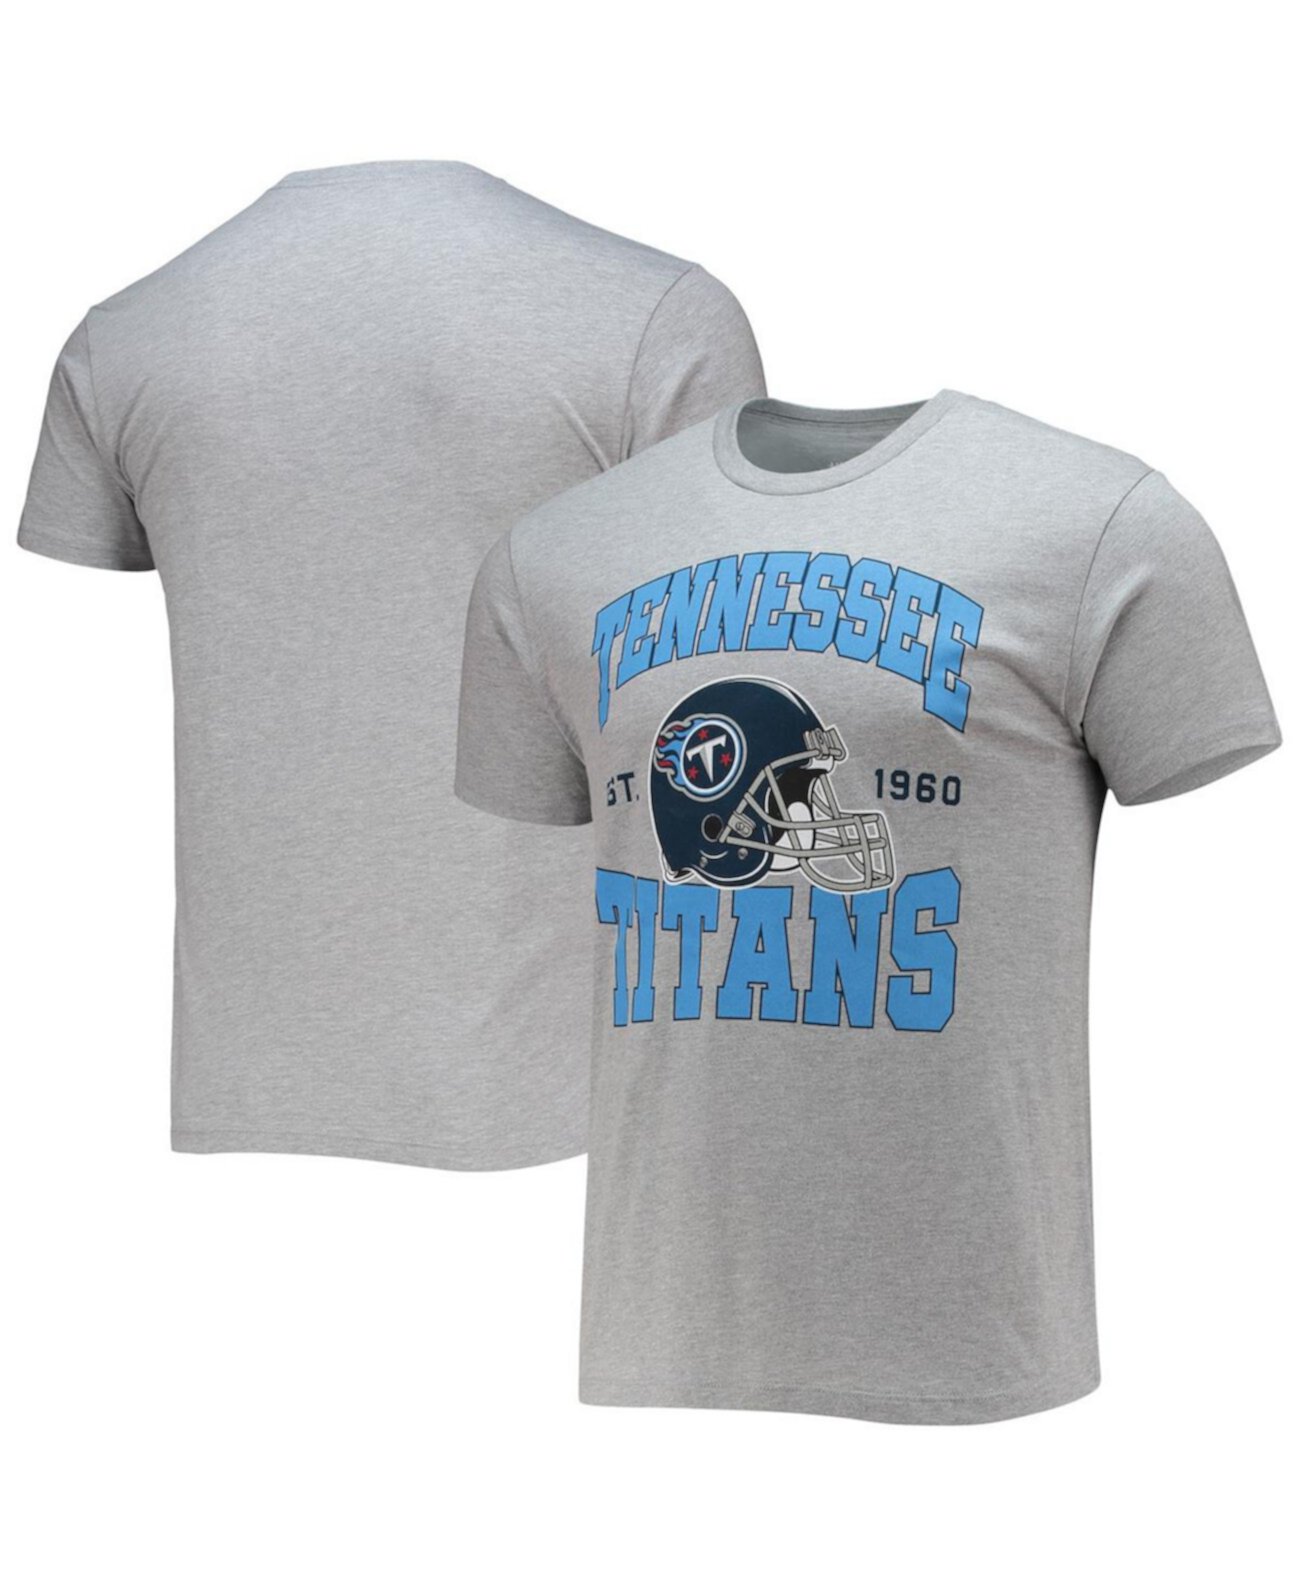 Мужская футболка Tennessee Titans со шлемом цвета меланжевого серого цвета Junk Food